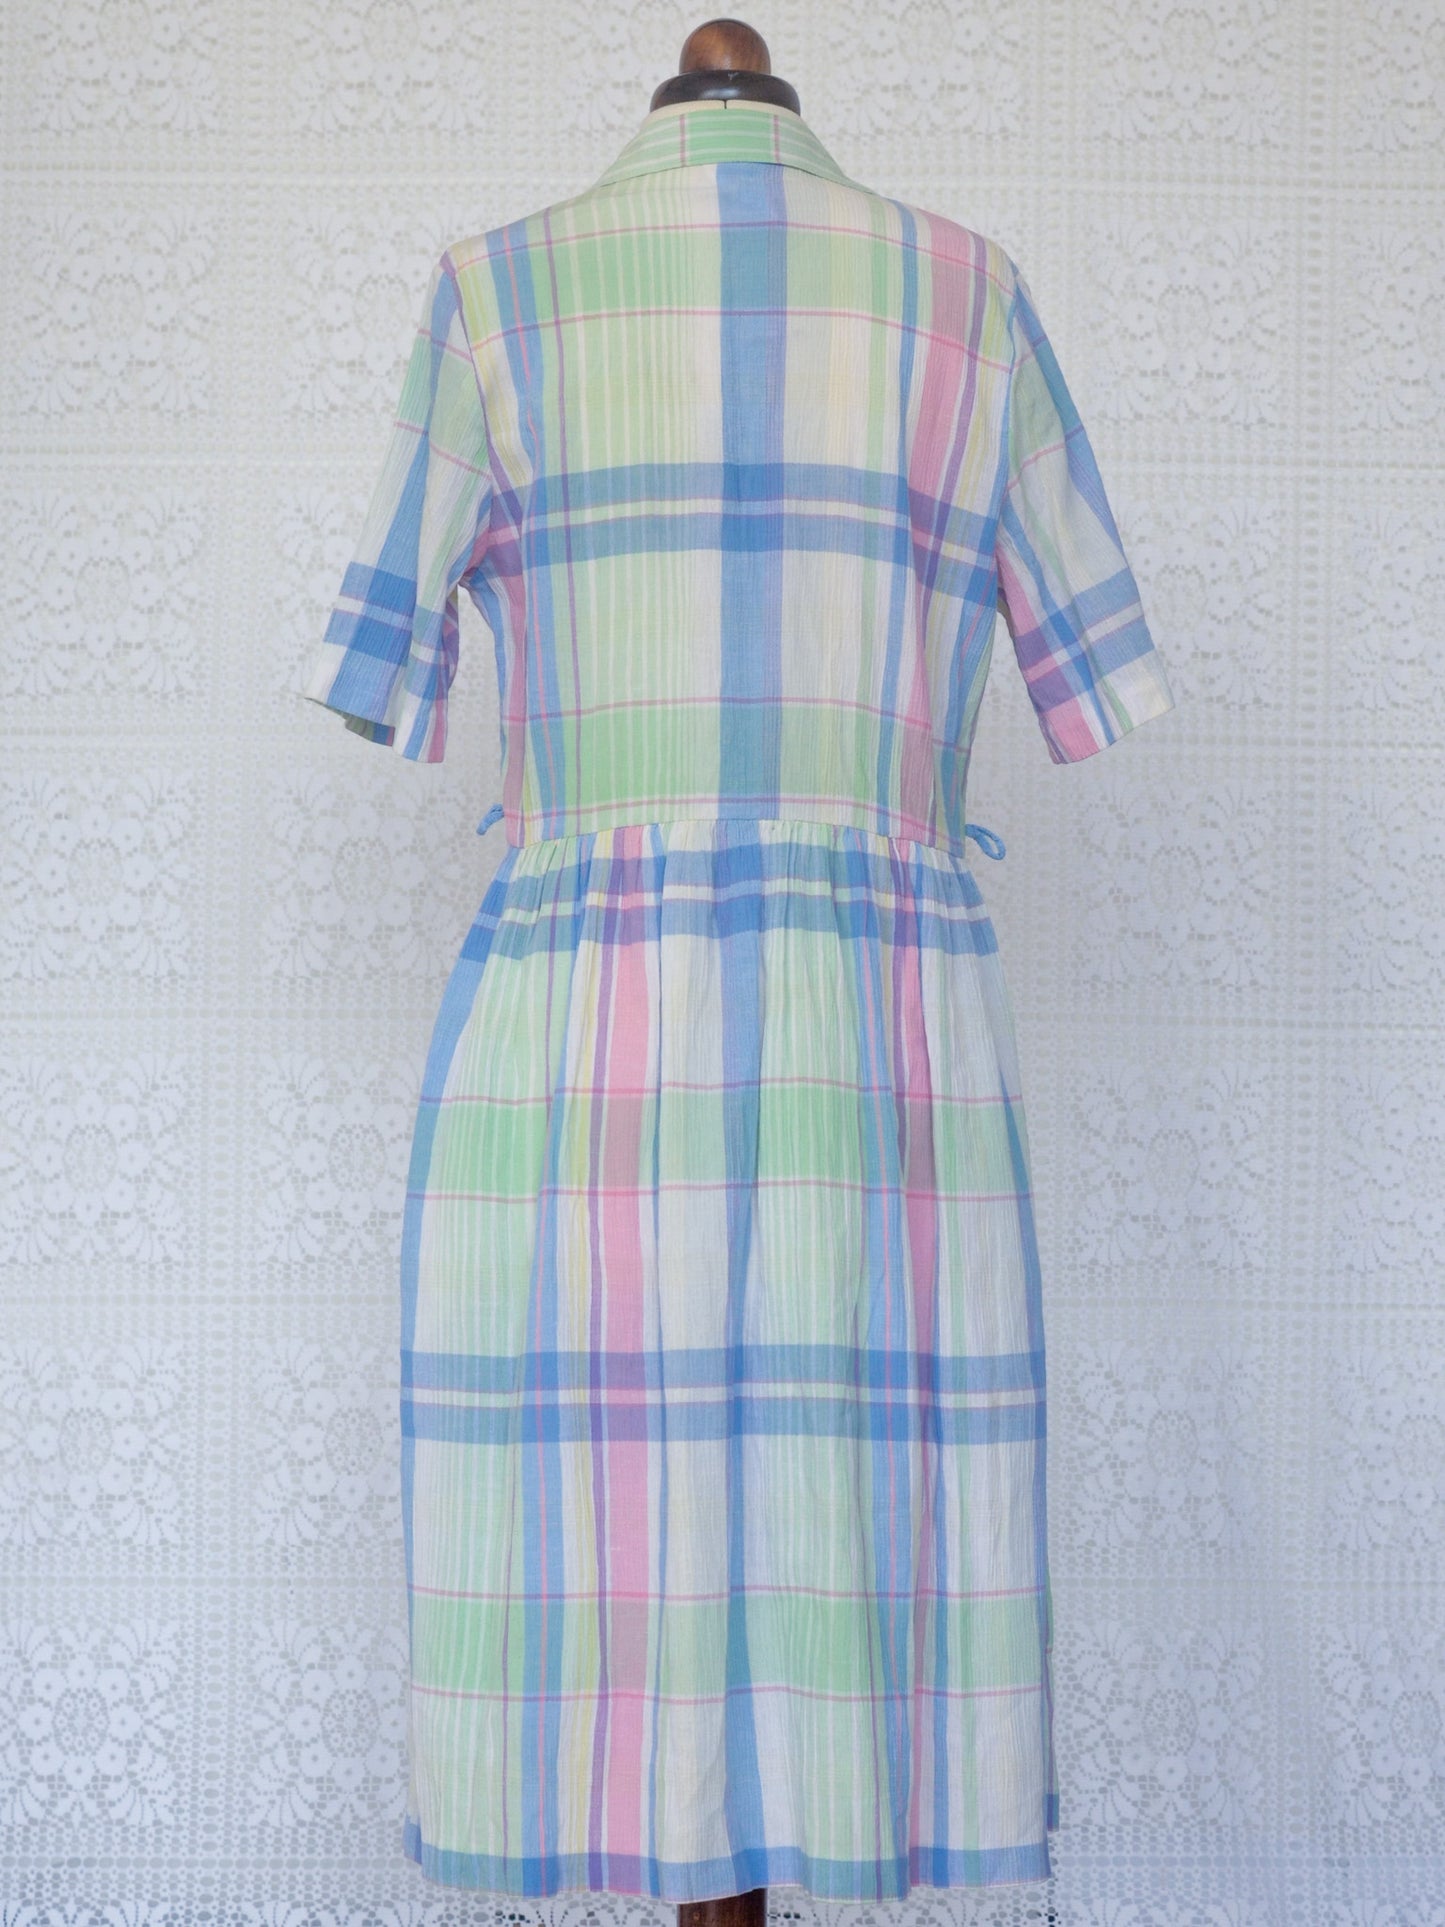 1980s St Michael pastel blue green and pink check short sleeve shirt dress